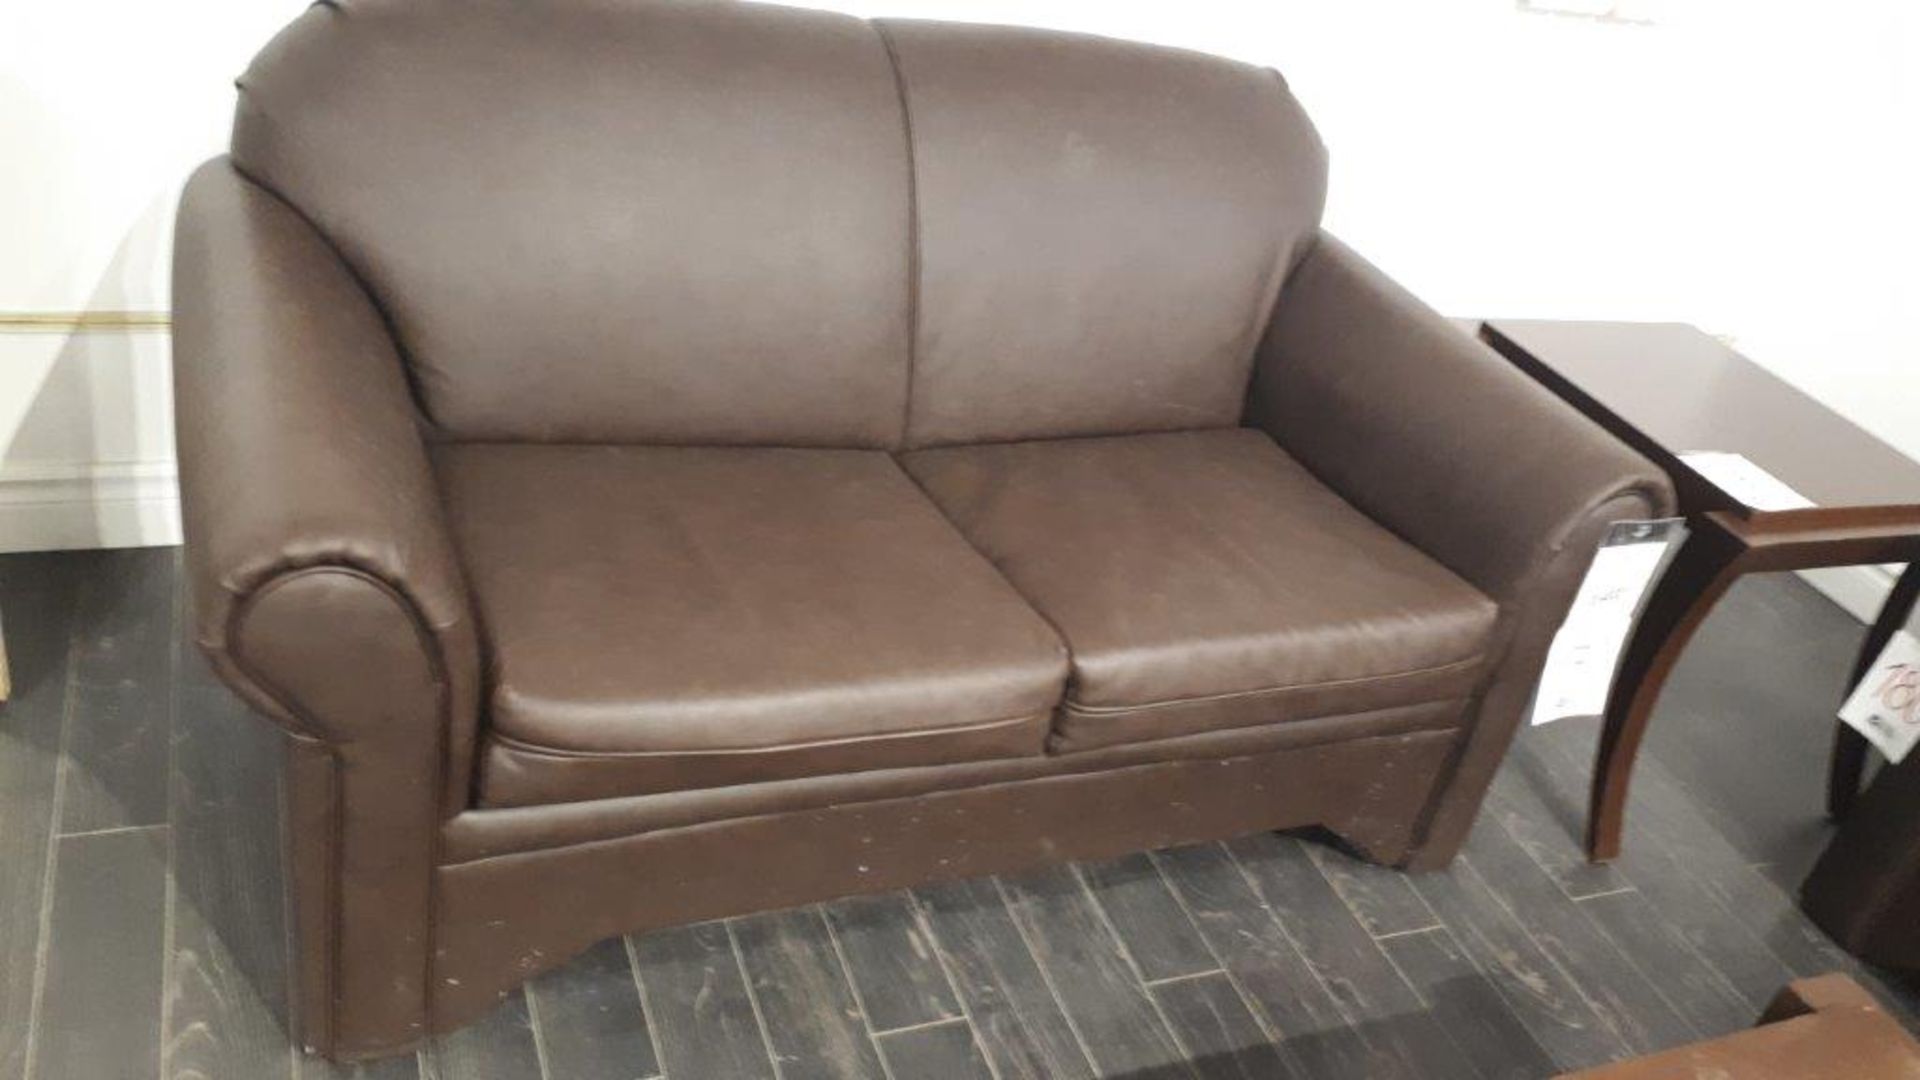 Leather (bicast) sofa, 2 seat